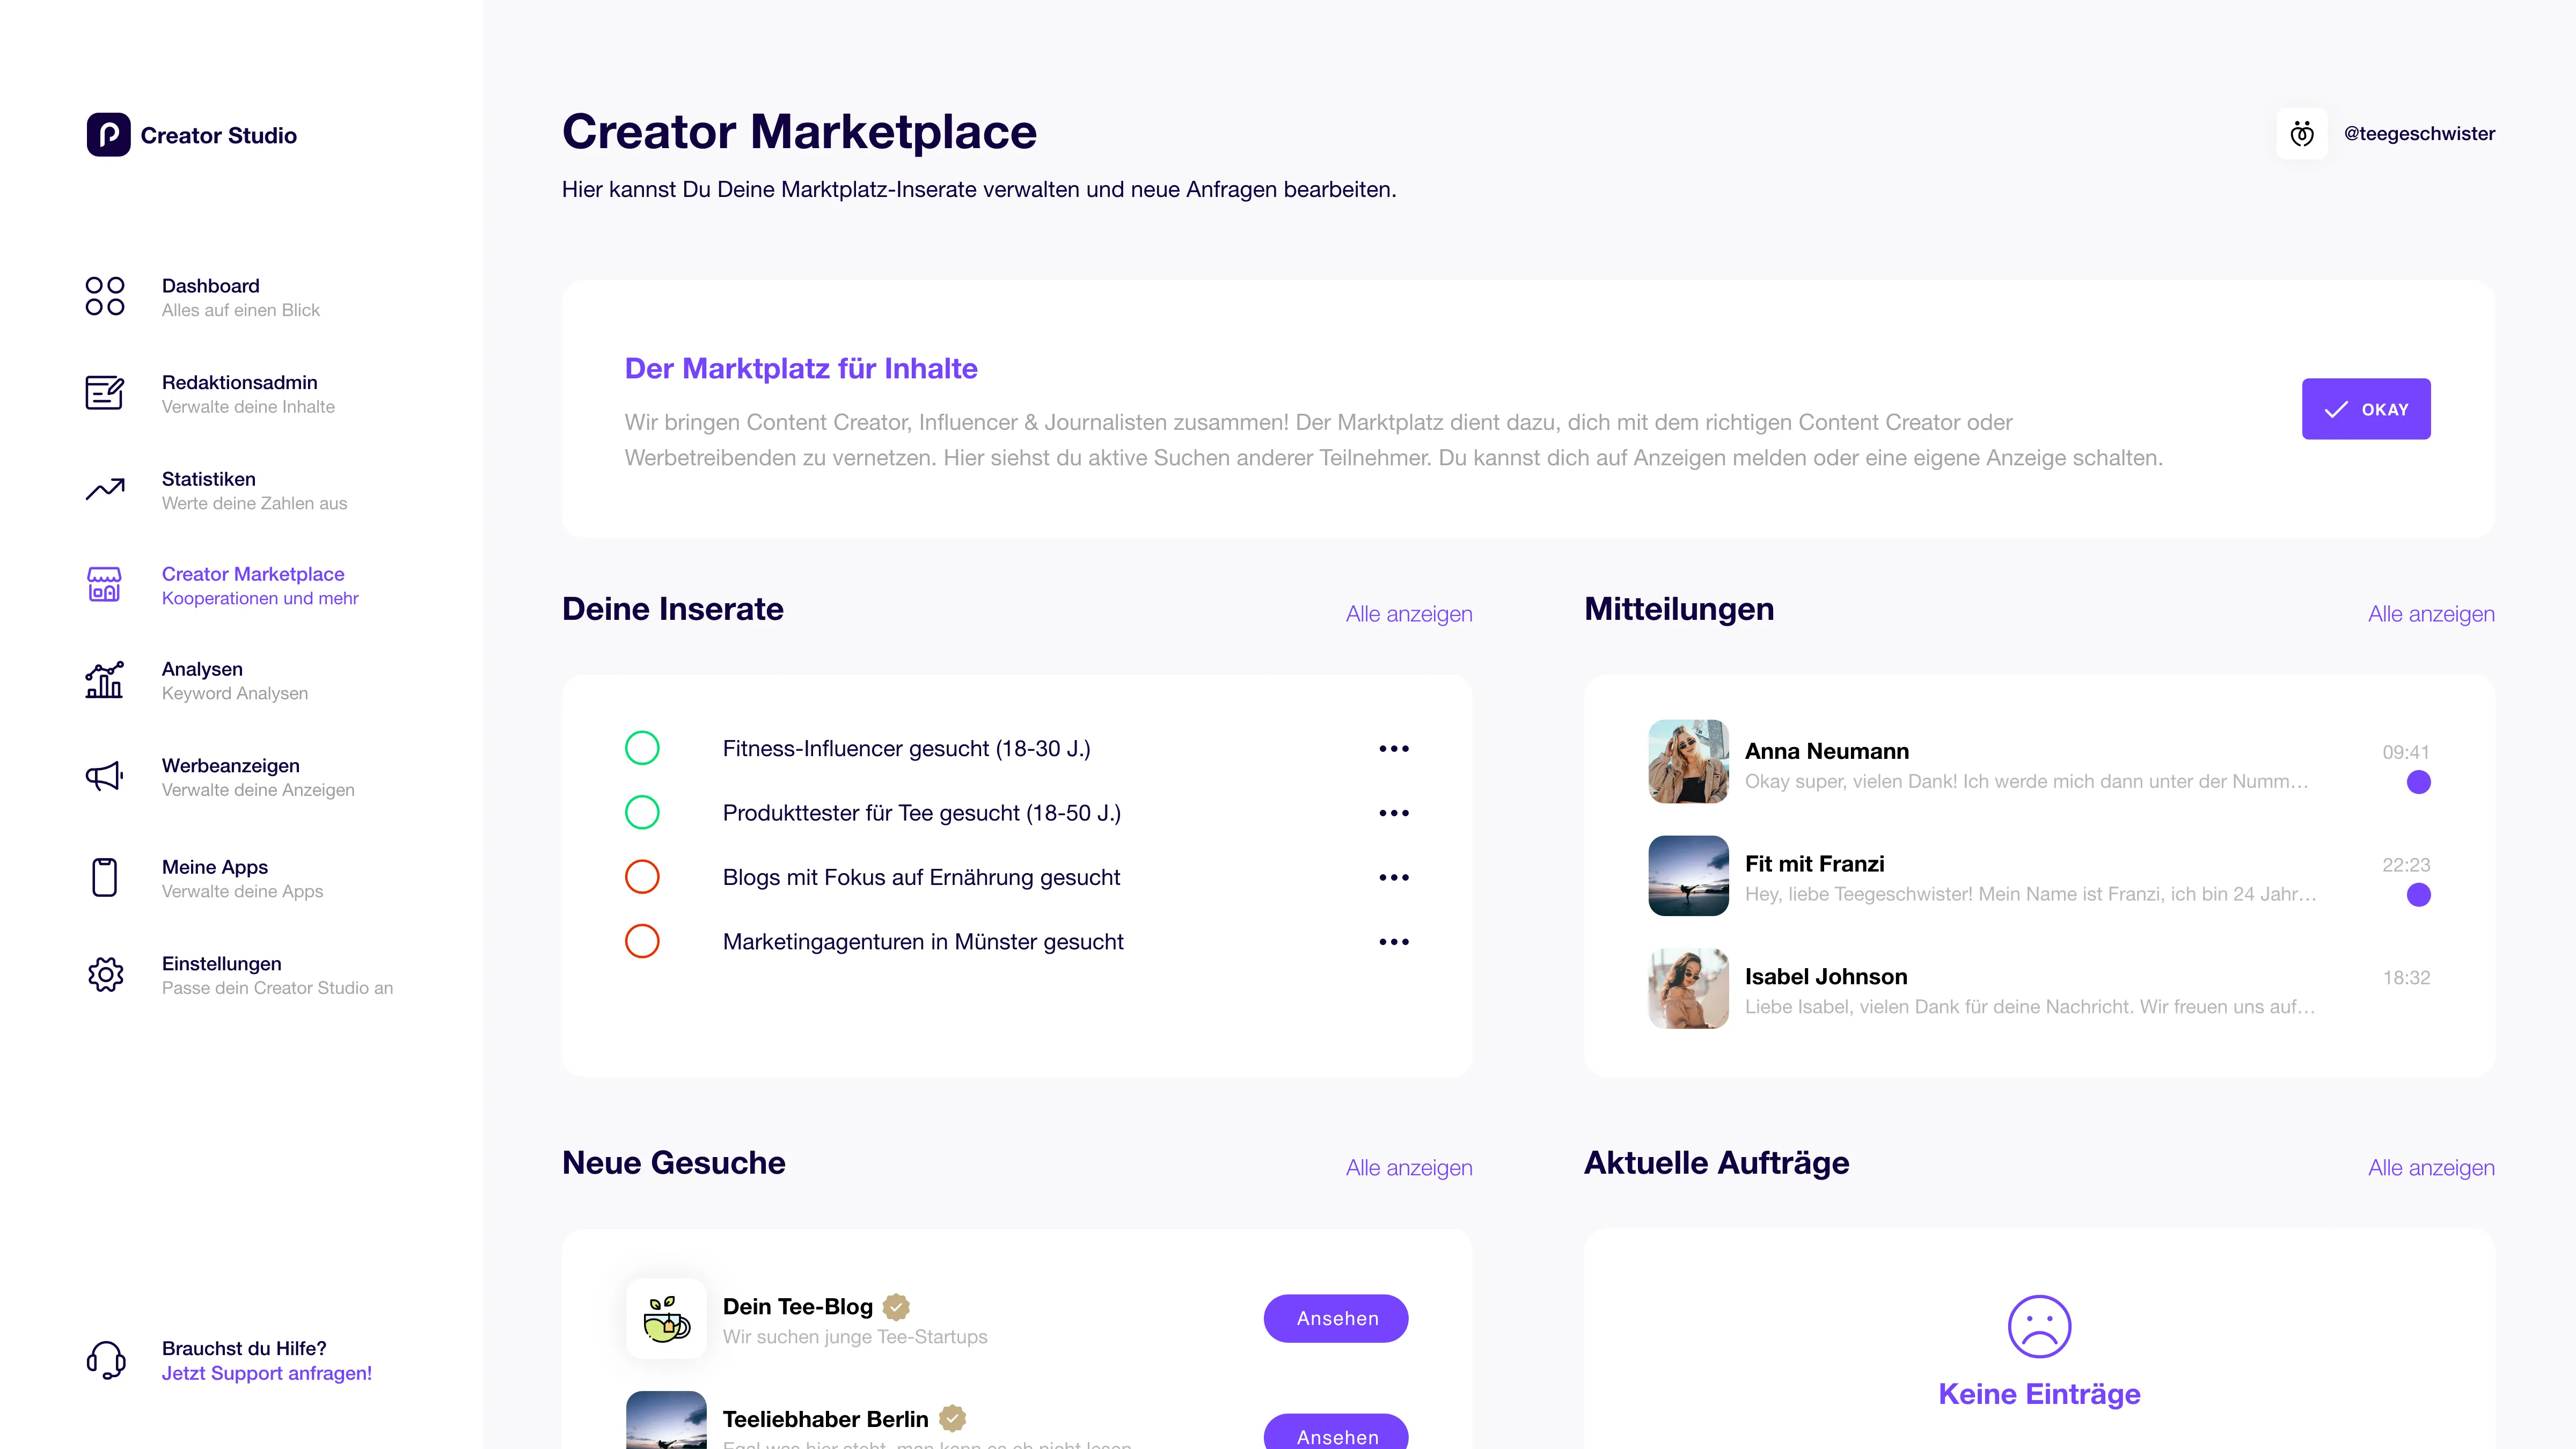 The marketplace for companies & content creators in the Creator Studio